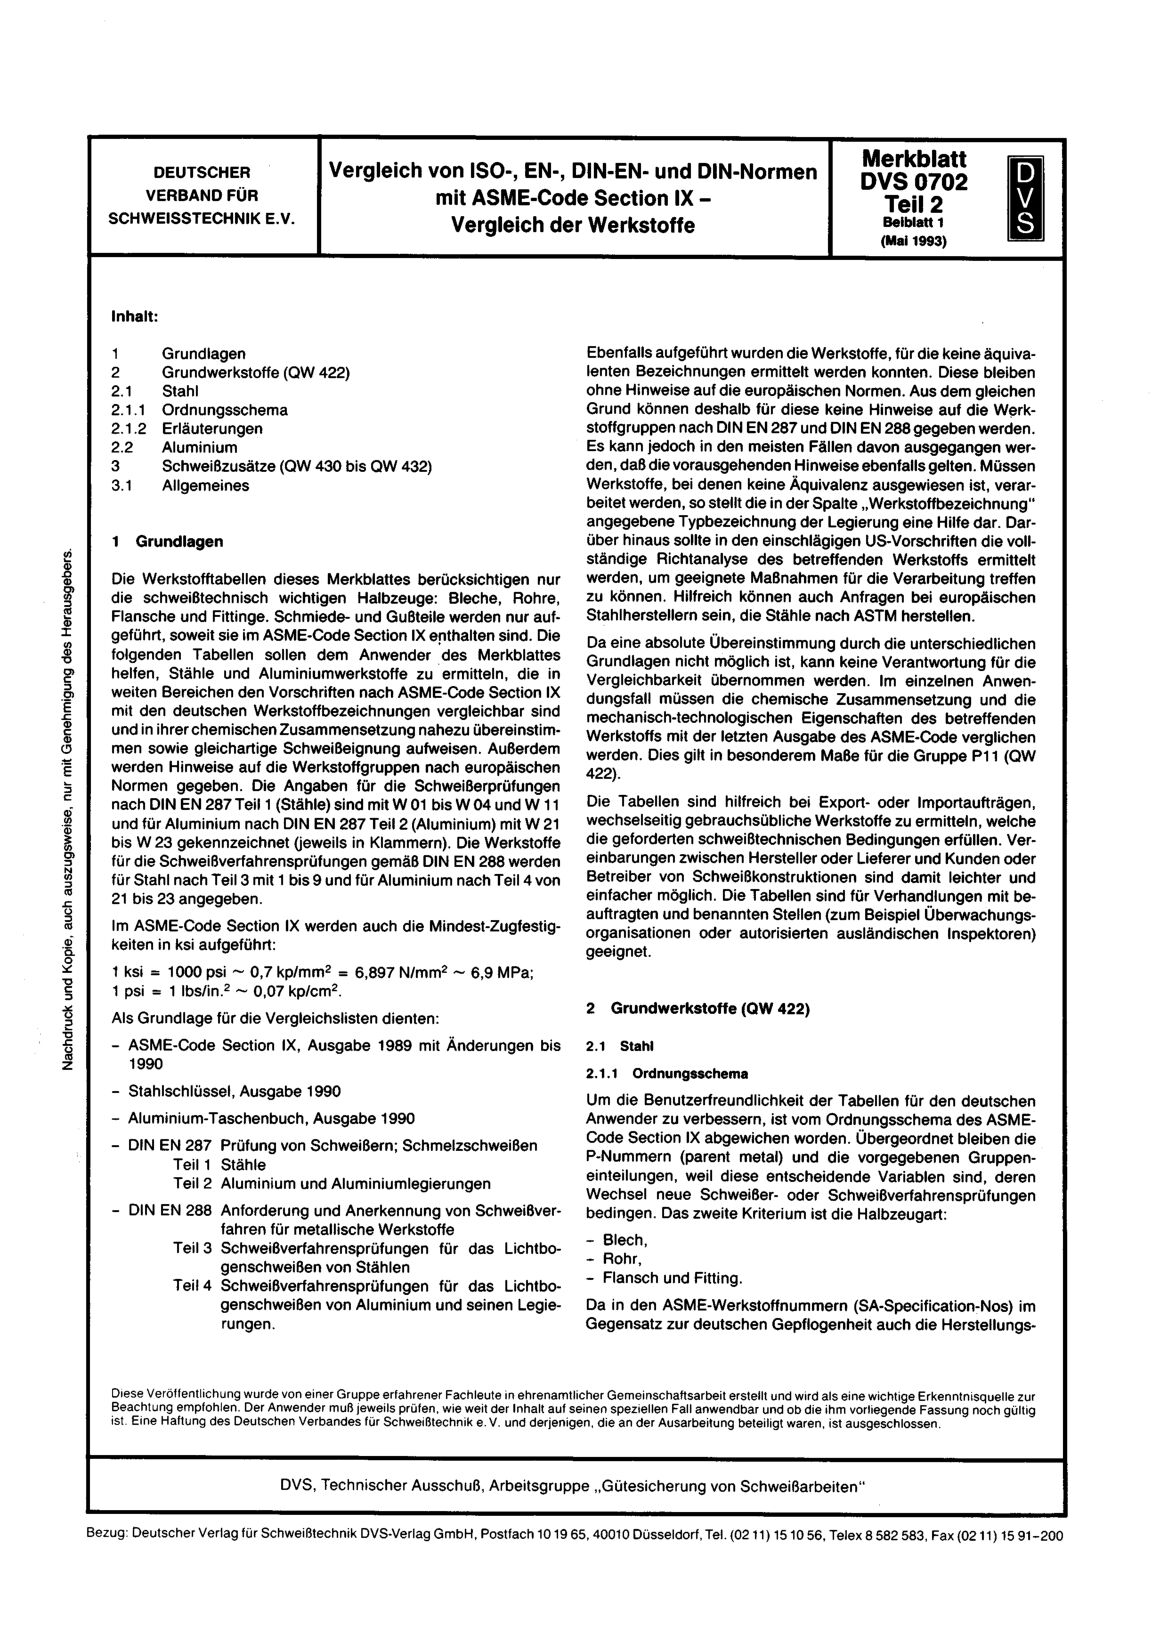 DVS 0702-2 Beiblatt 1-1993封面图